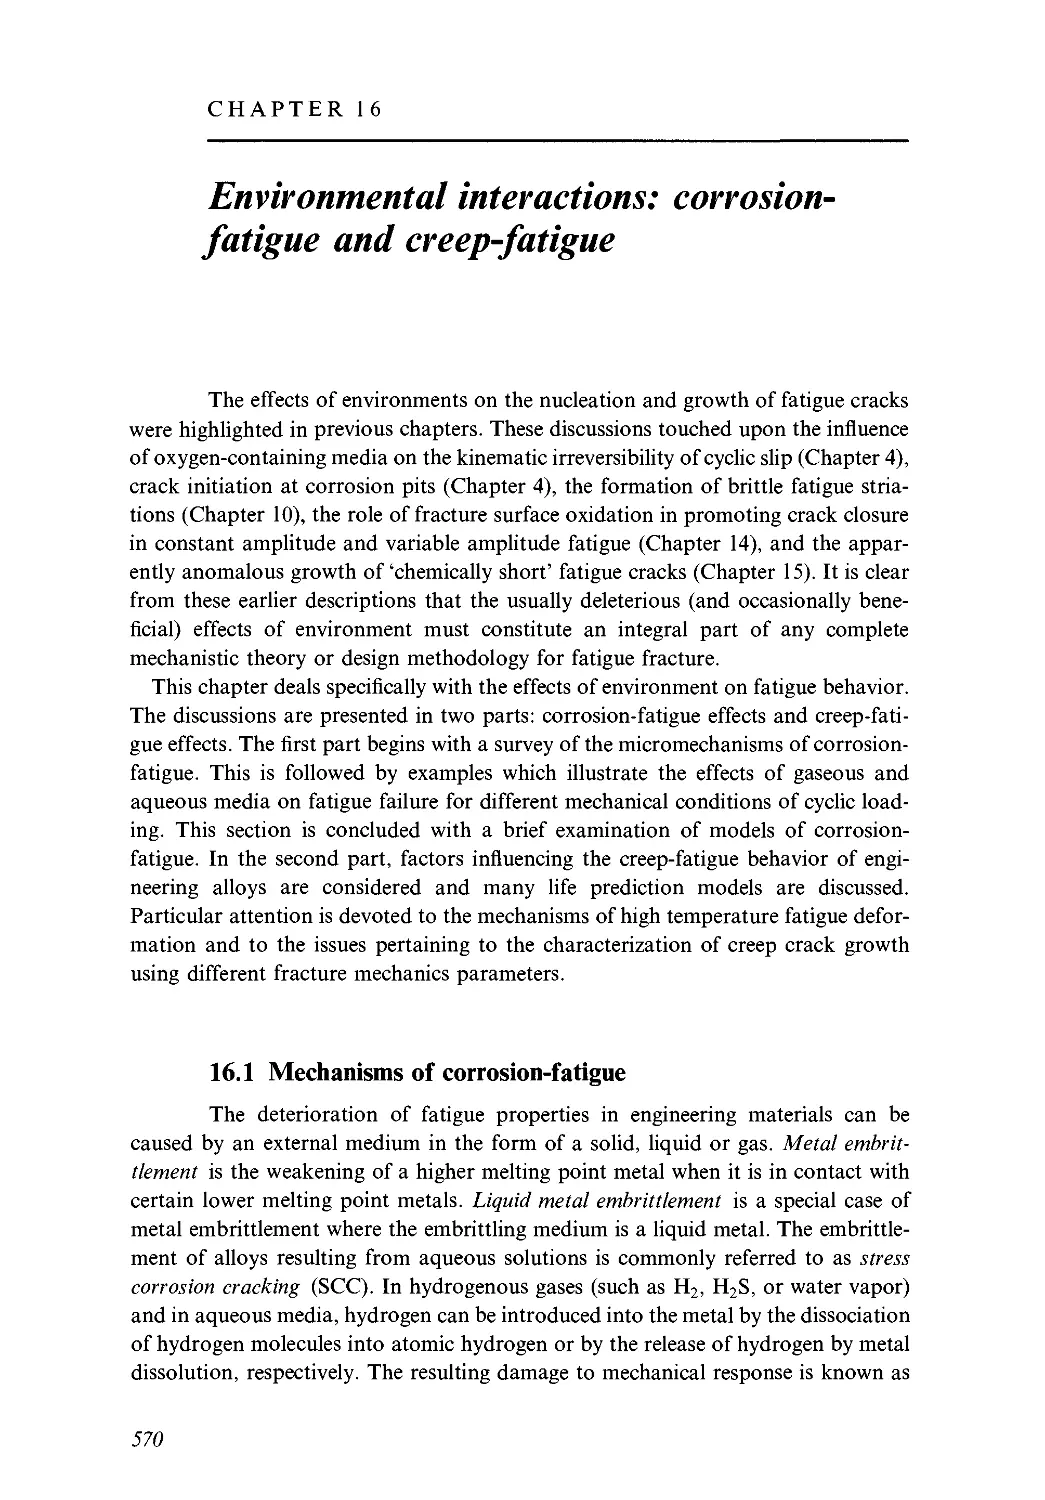 16 - Environmental interactions: corrosion-fatigue and creep-fatigue